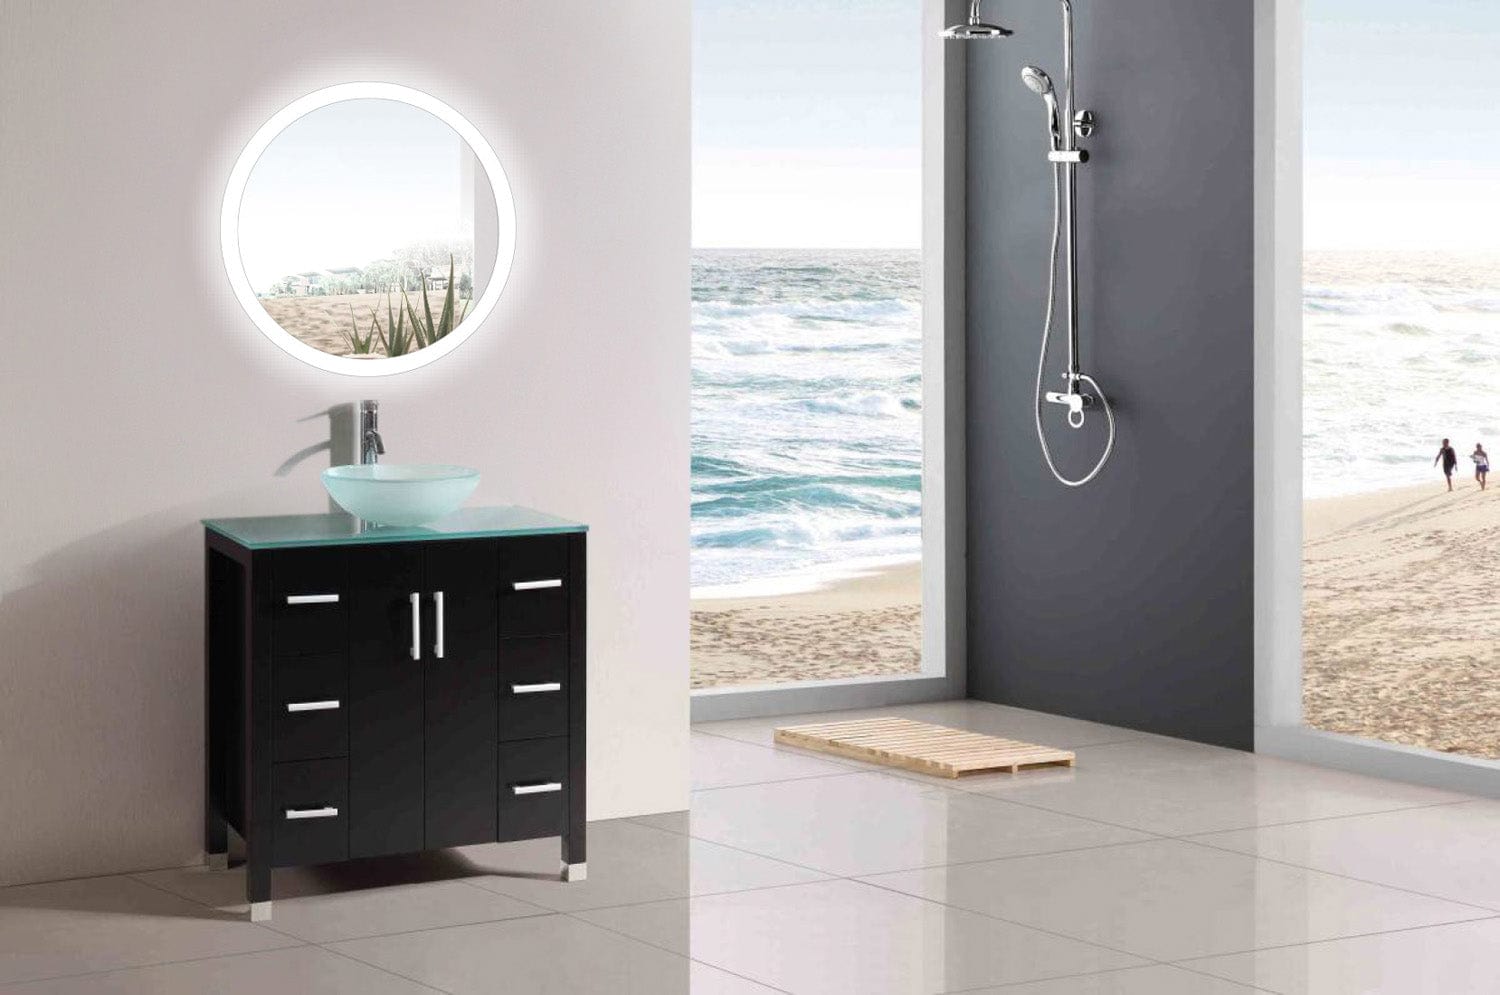 Sol Round 27" x 27" LED Bathroom Mirror w/ Dimmer & Defogger | Round Back-lit Vanity Mirror - Molaix - Molaix635833354763Lighted Wall Mirror,RoundSOL2727R